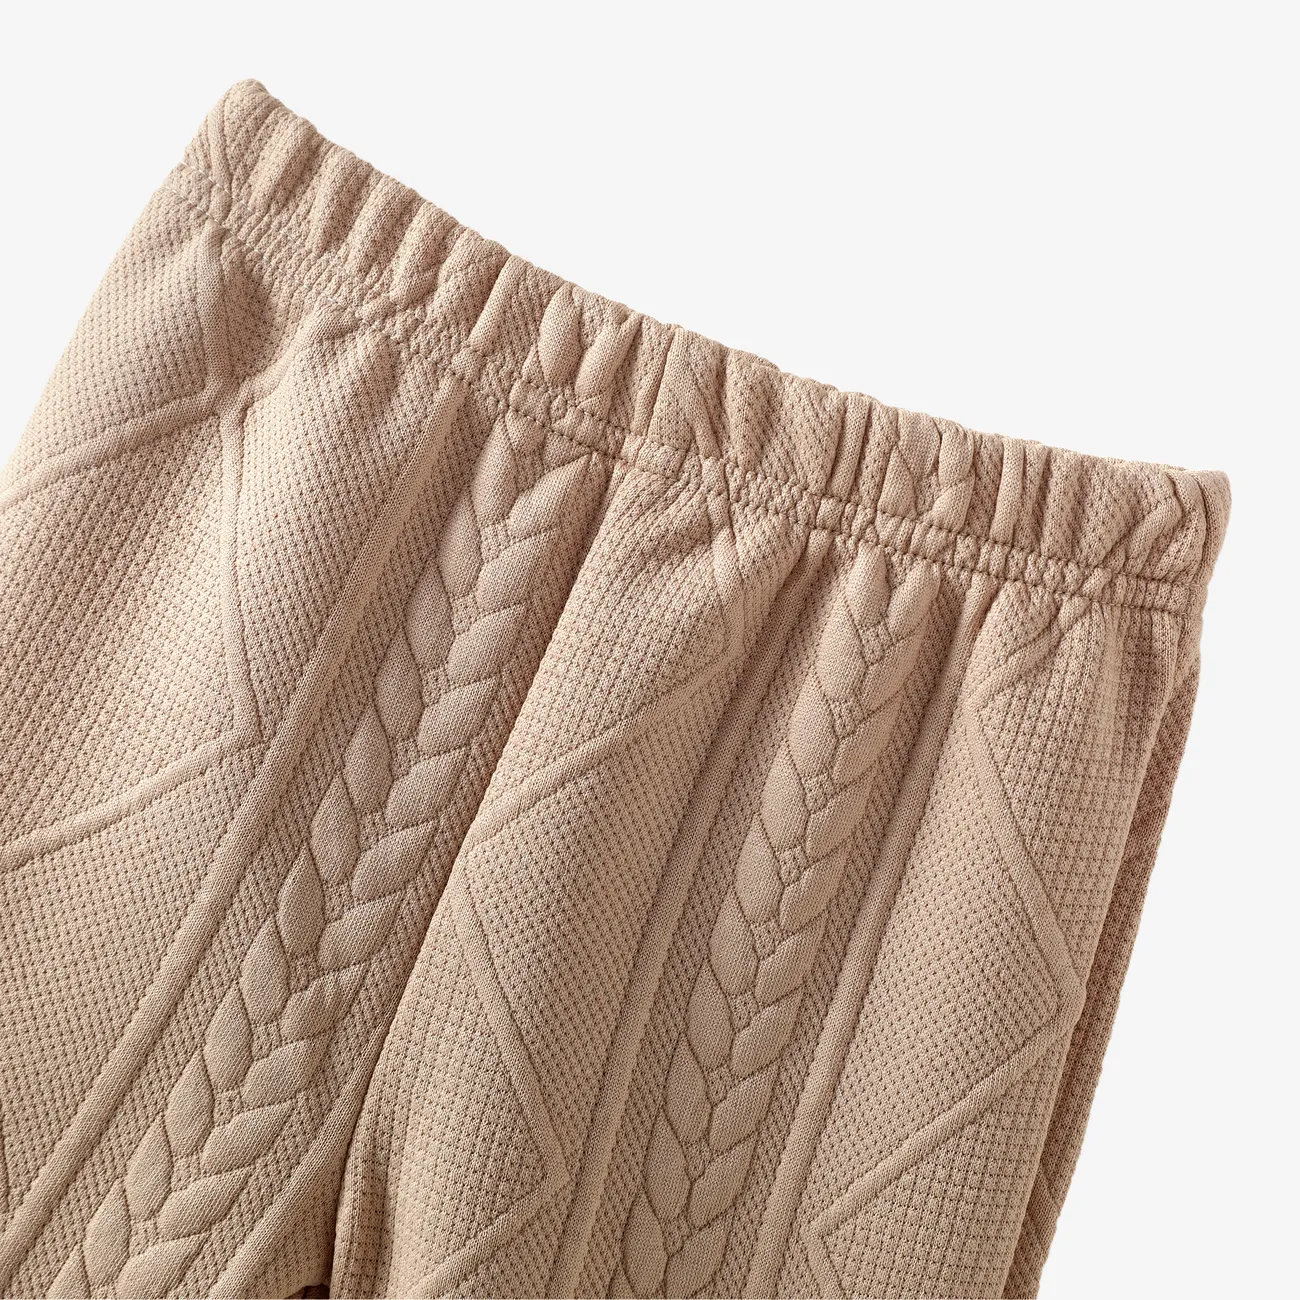 2pcs Baby Boy/Girl Deer Embroidered Long-sleeve Textured Hoodie and Sweatpants Set Khaki big image 1